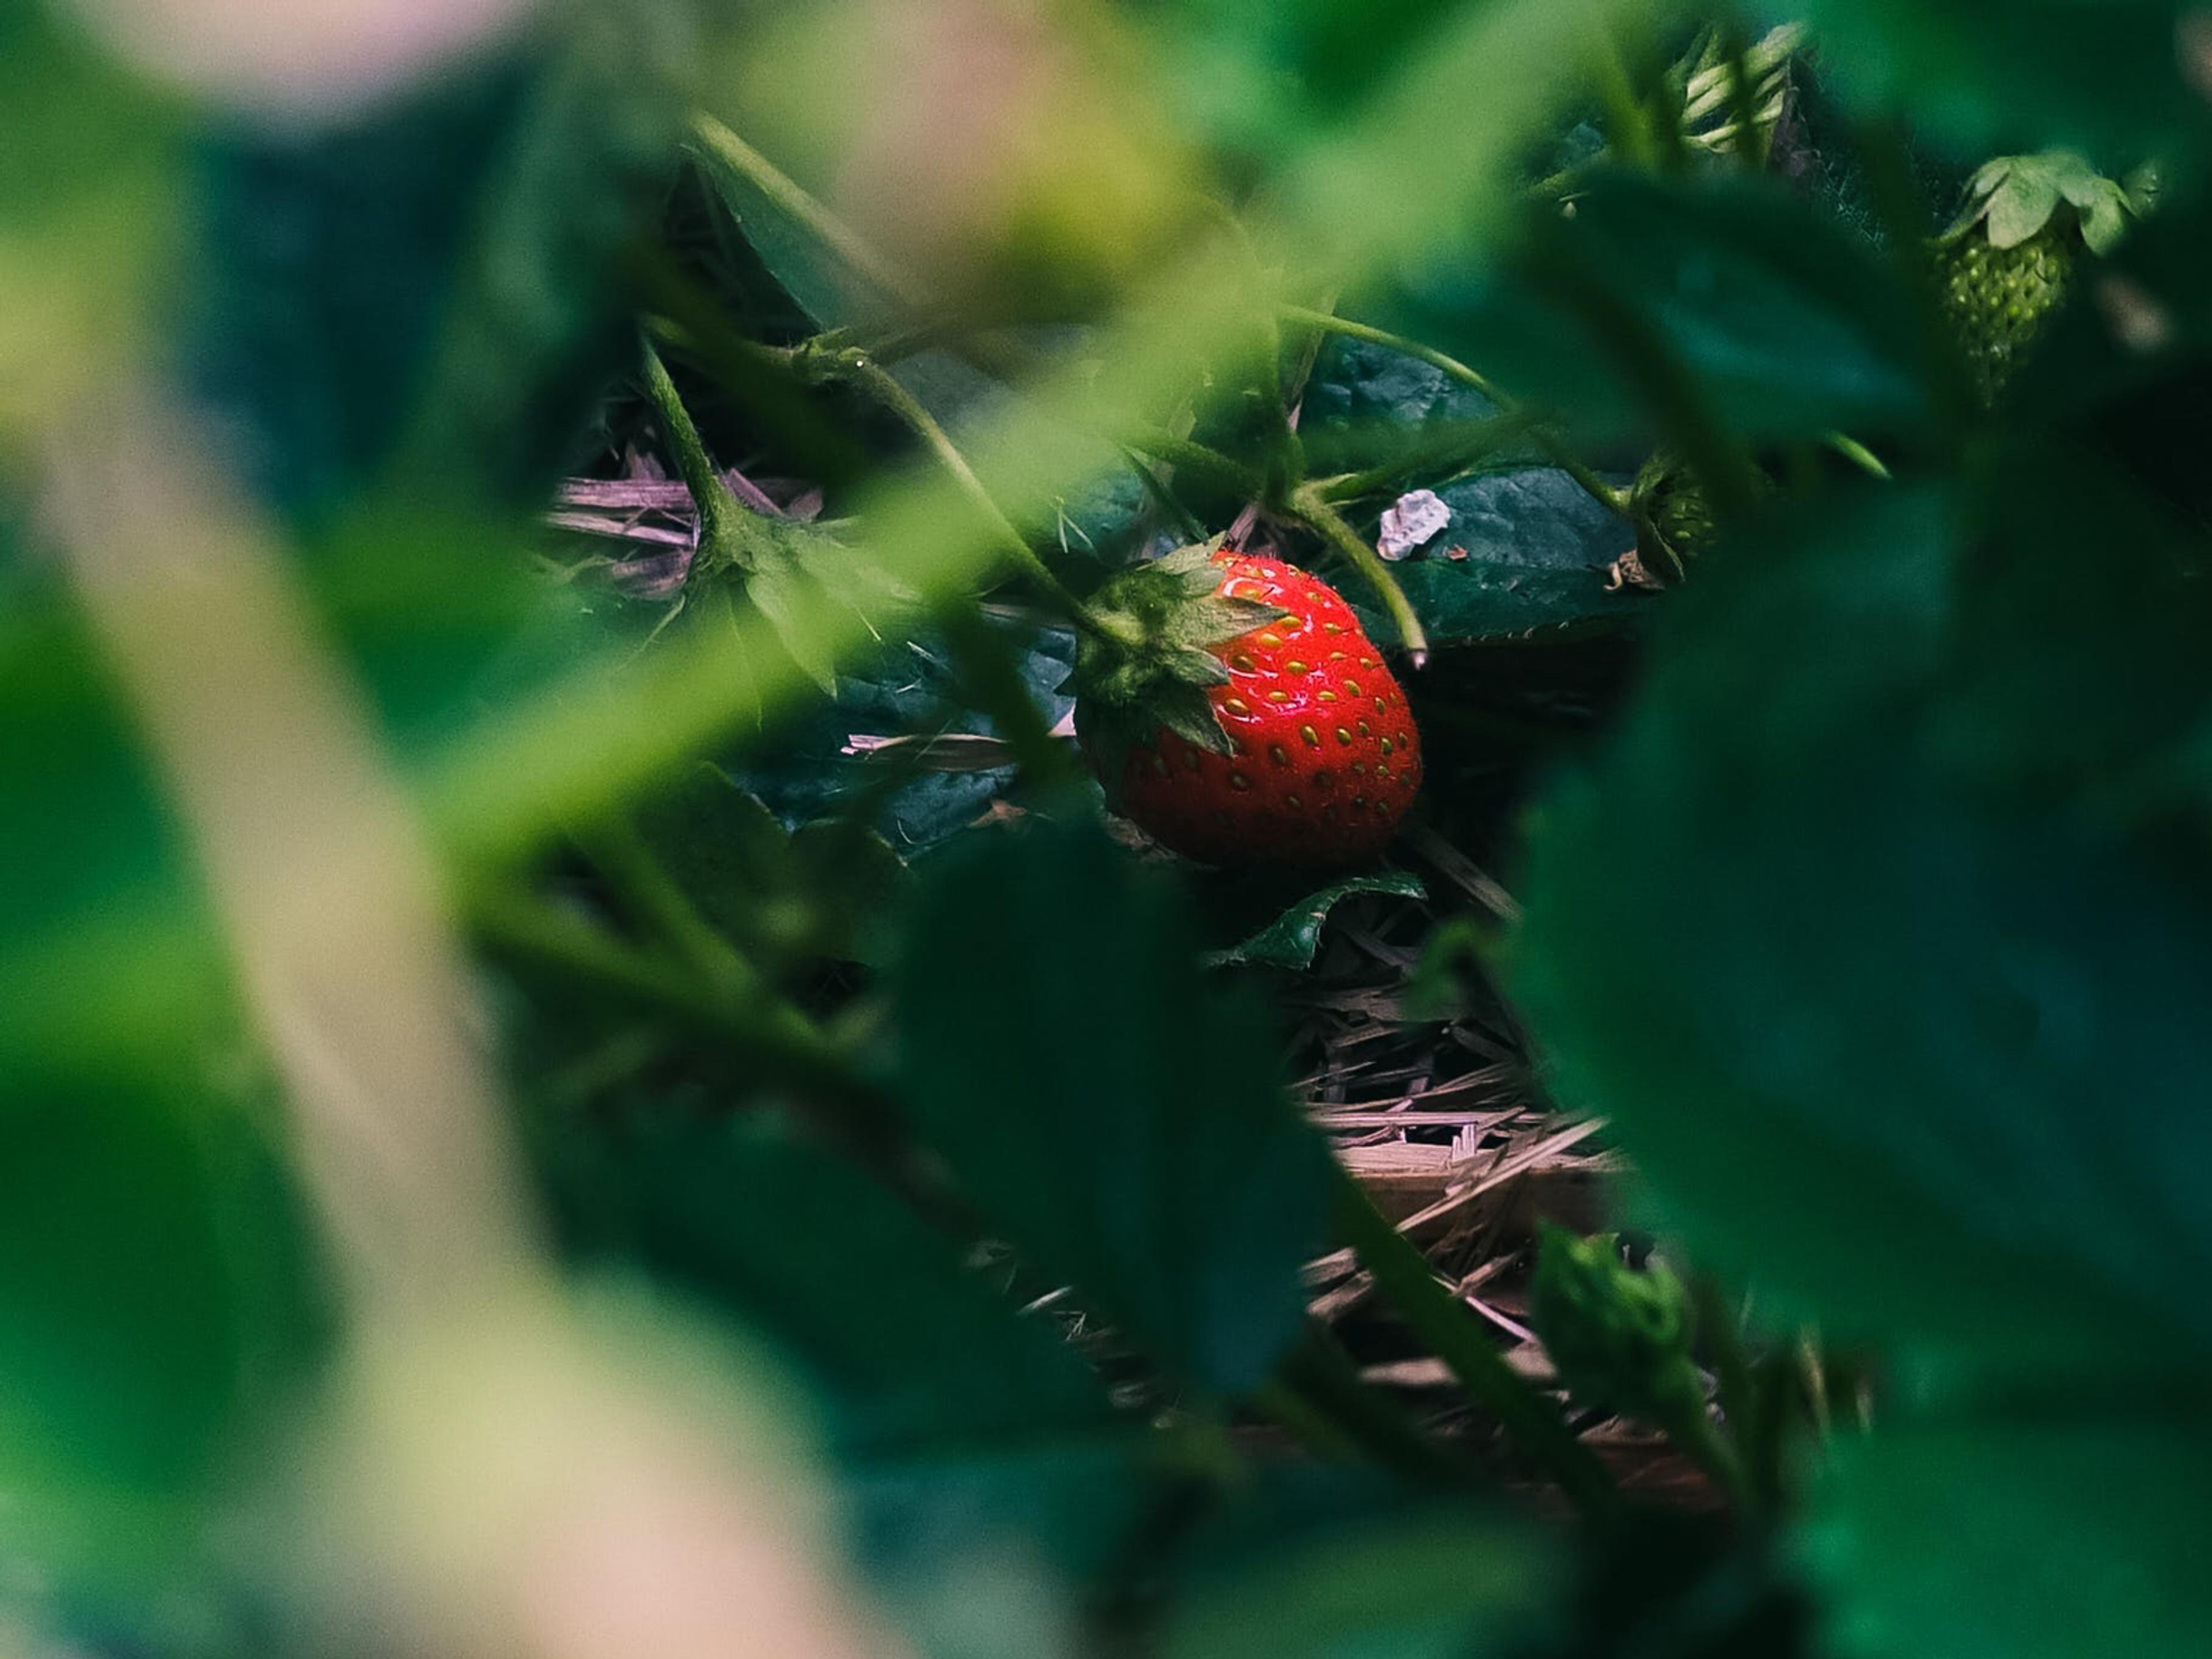 A single strawberry growing in amongst greenery.